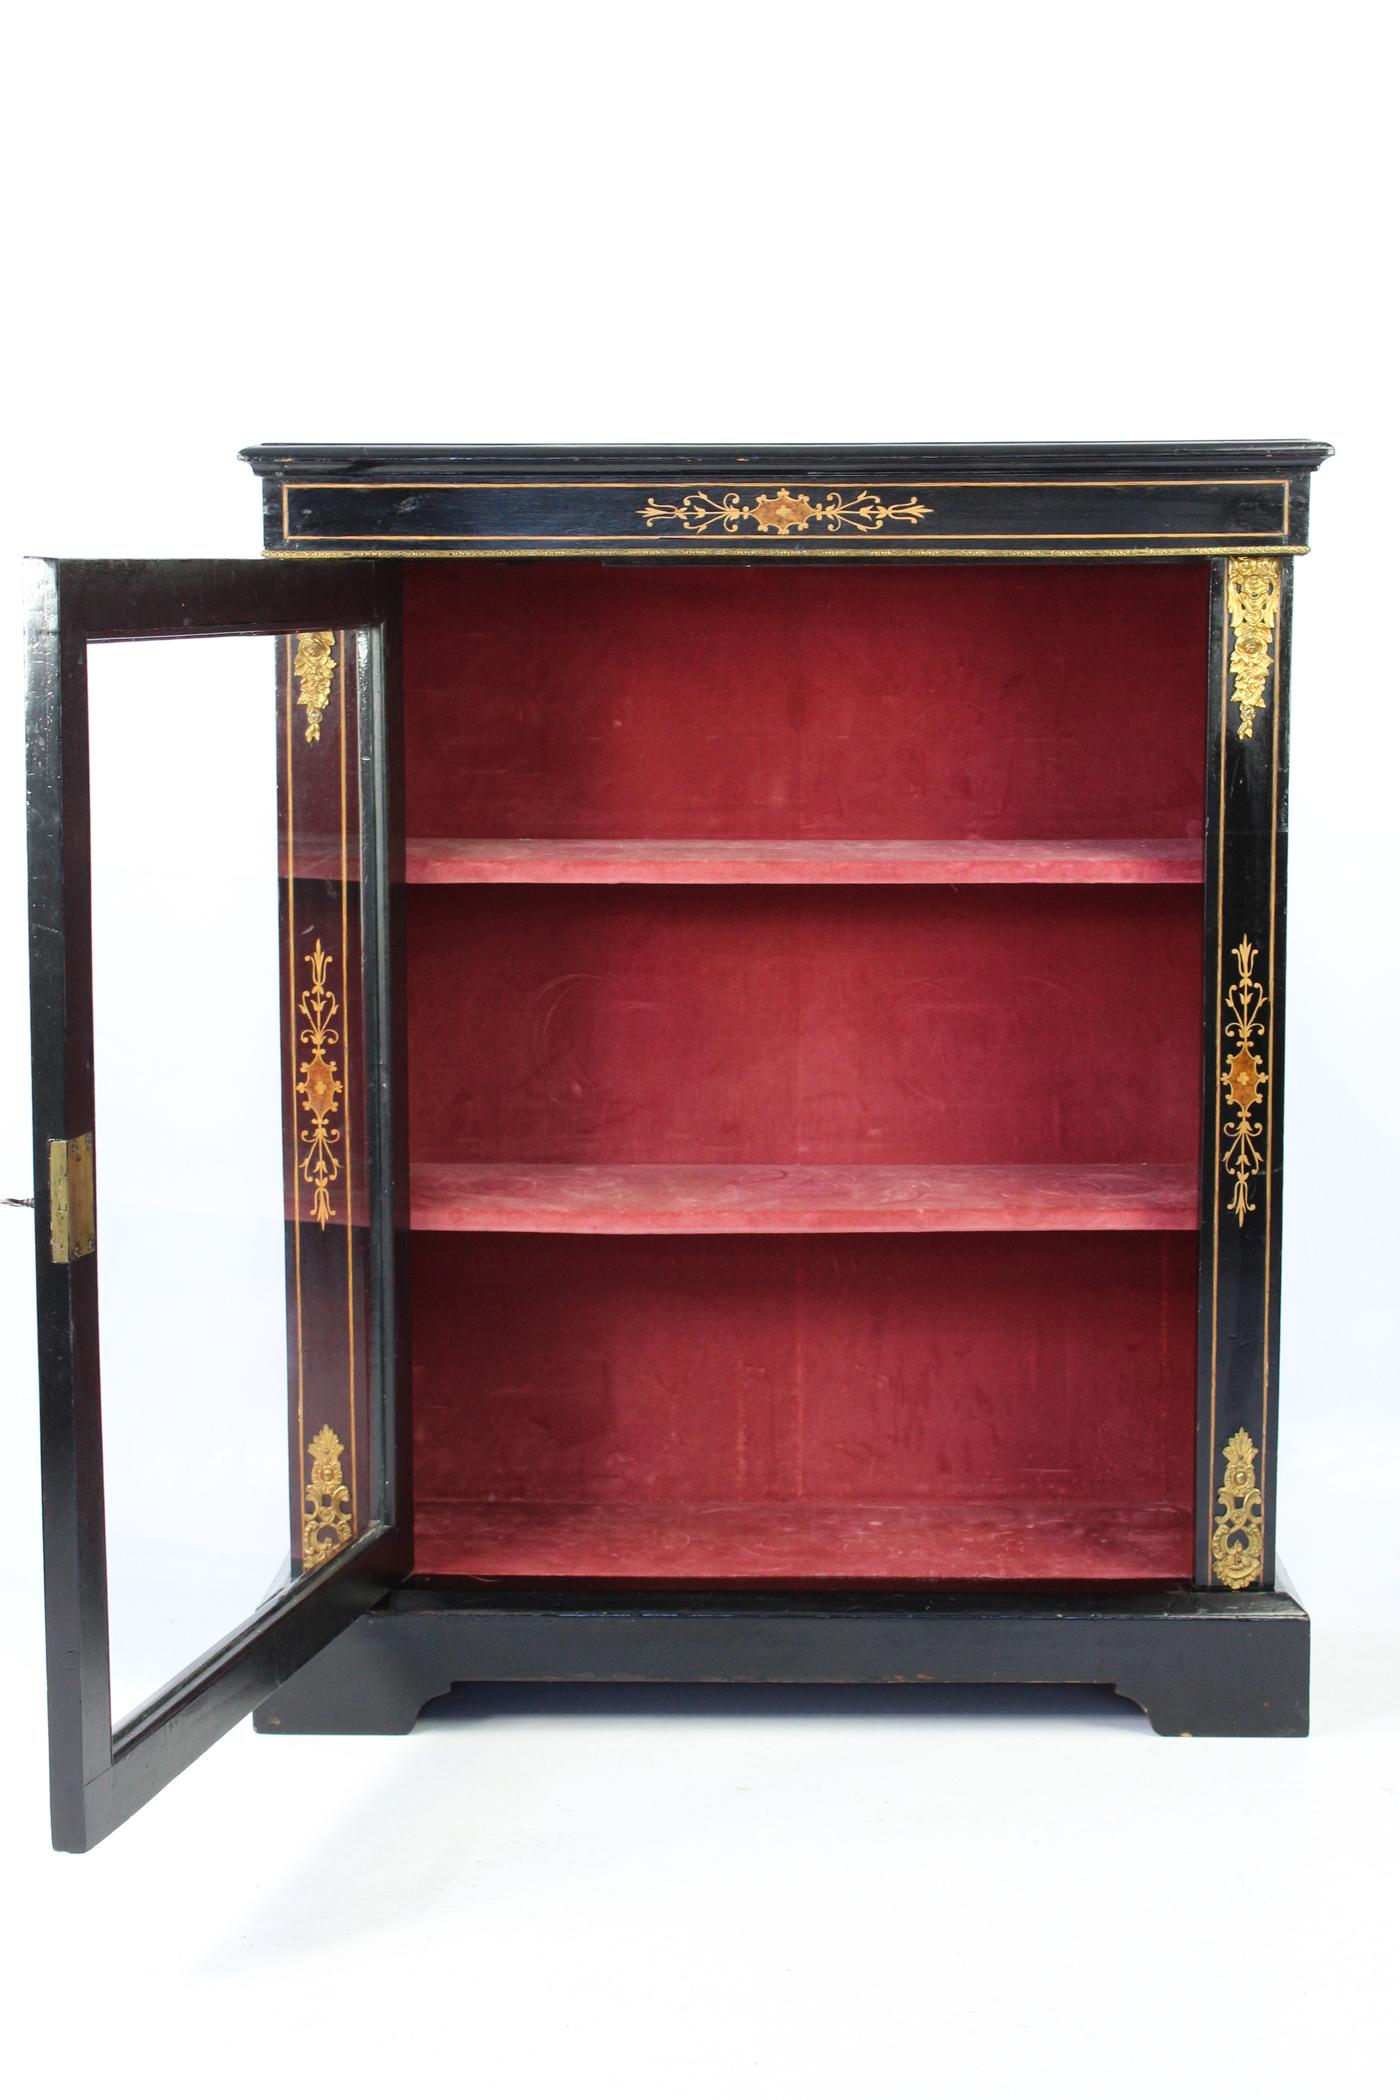 Late 19th Century Antique English Victorian Ebonised Pier Cabinet Bookcase Display Unit circa 1880